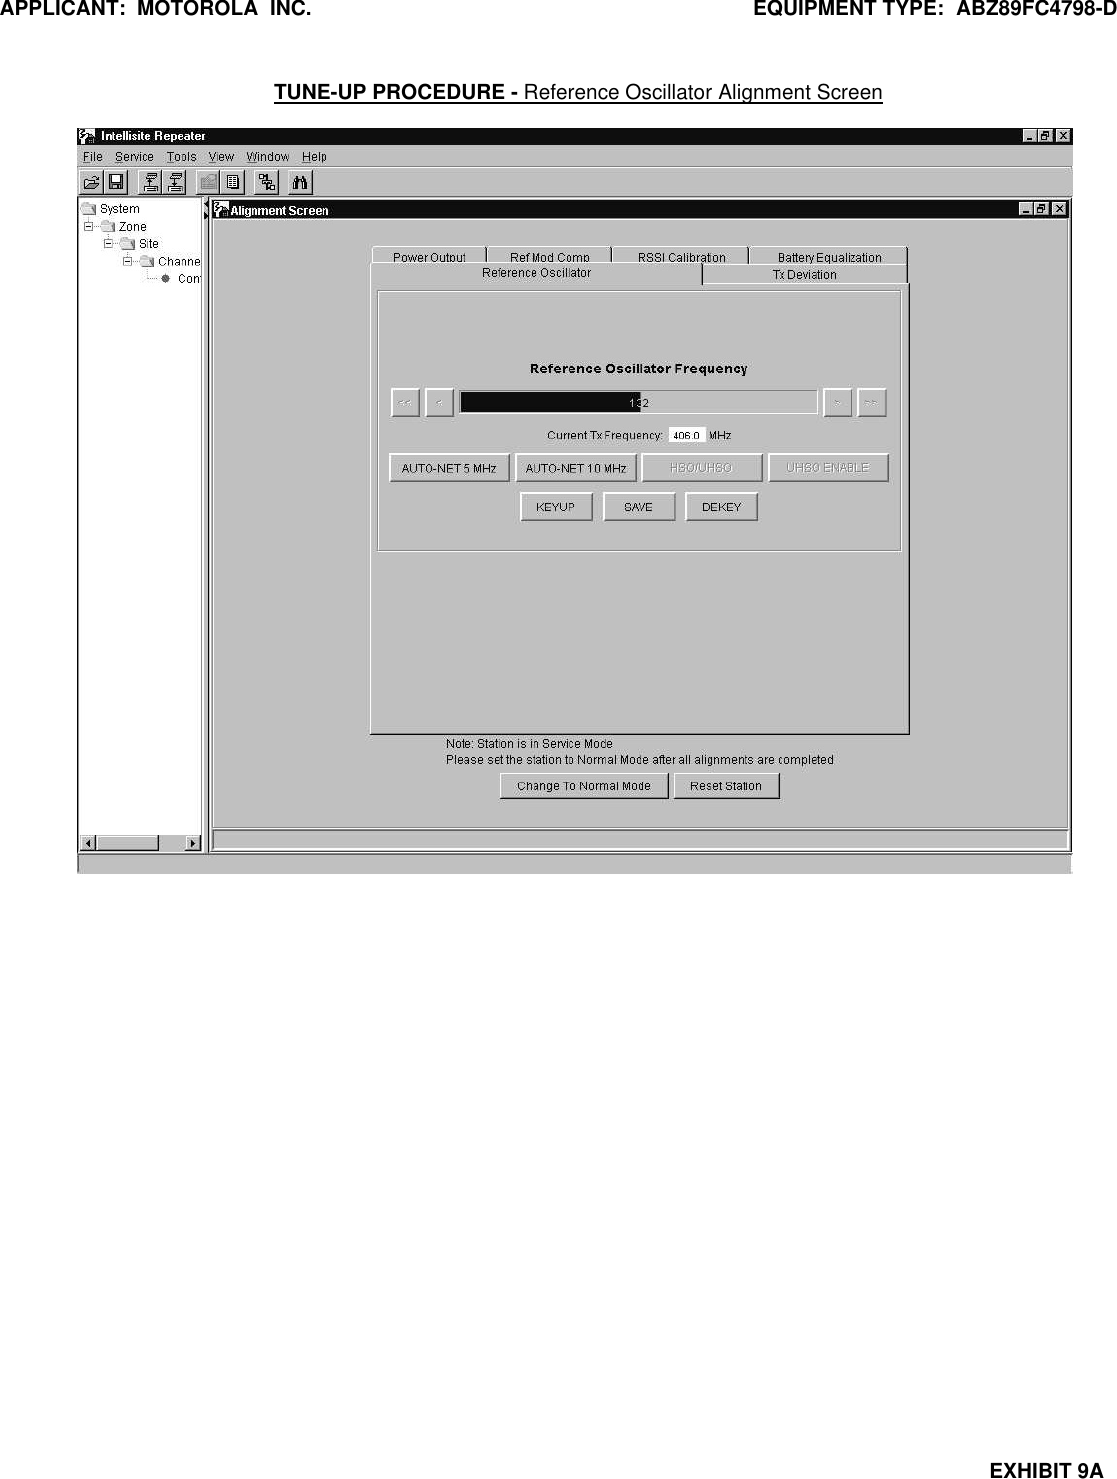 APPLICANT:  MOTOROLA  INC. EQUIPMENT TYPE:  ABZ89FC4798-DEXHIBIT 9ATUNE-UP PROCEDURE - Reference Oscillator Alignment Screen